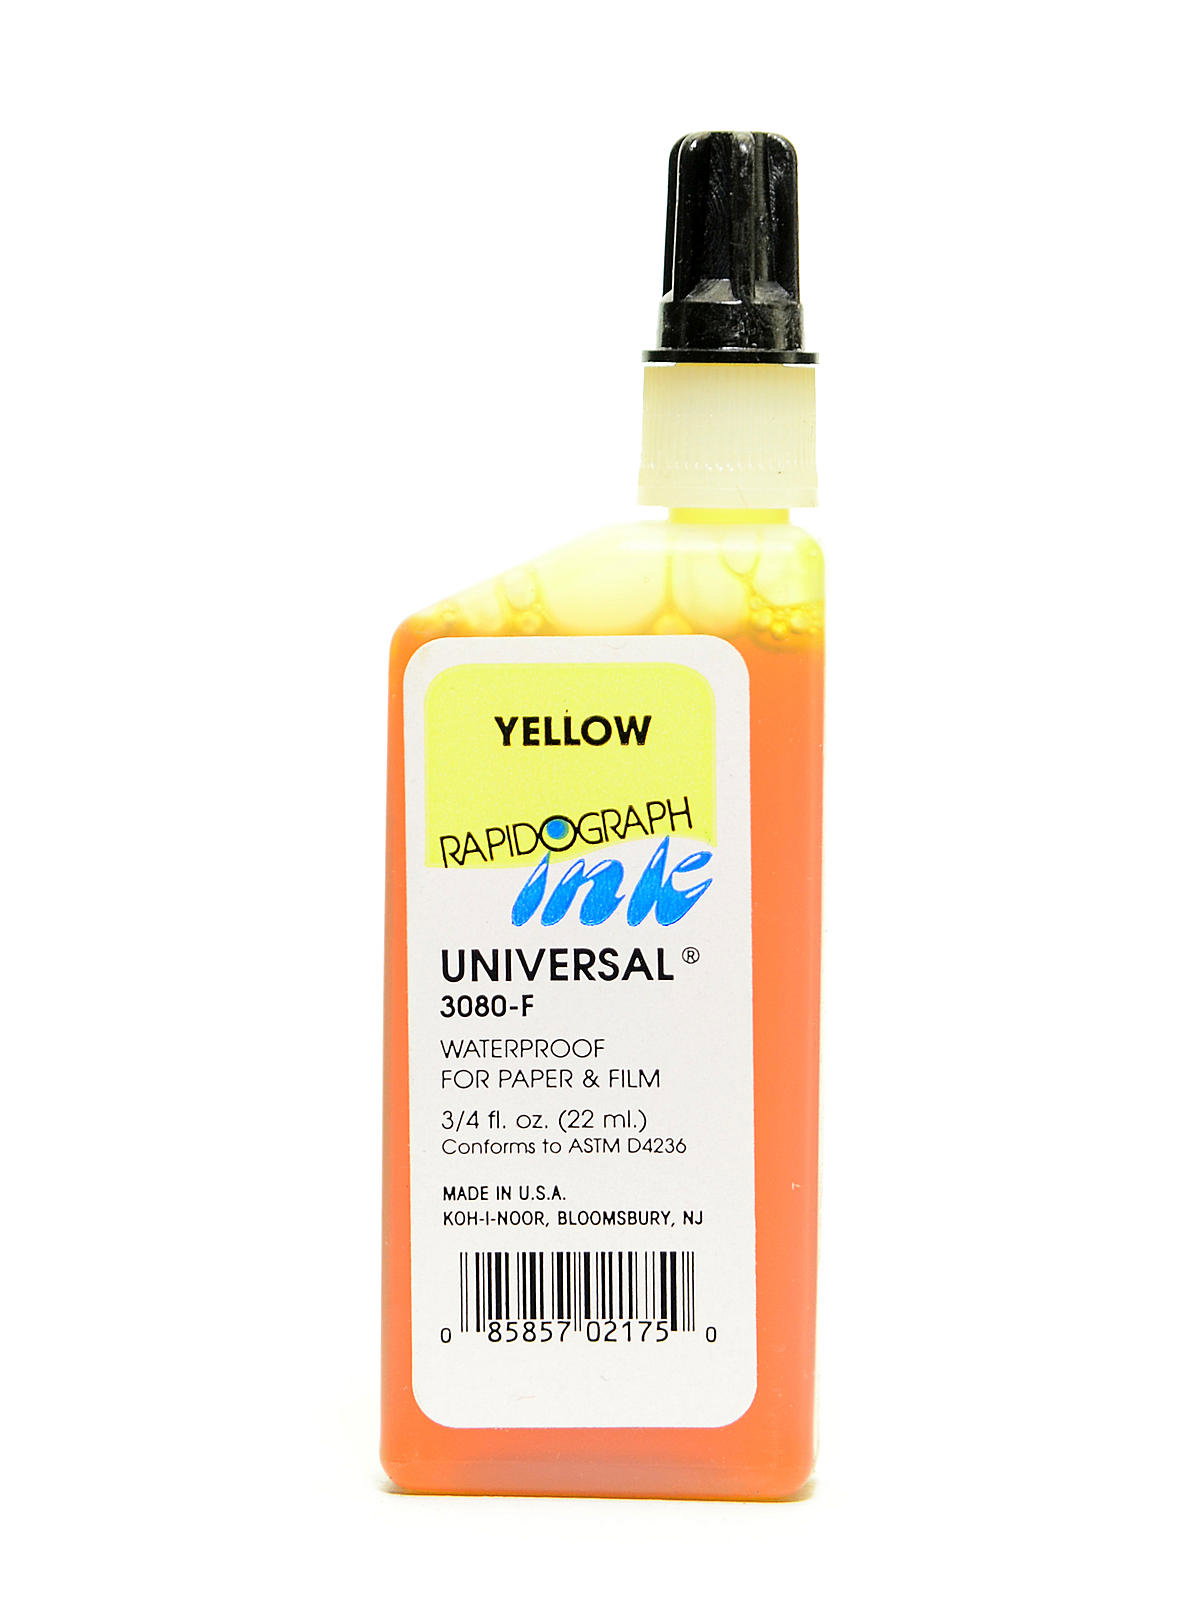  Koh-I-Noor Ultradraw Pigment-Based Ink, 0.75 Ounce Bottle,  Black (3085F.BLA) : Everything Else